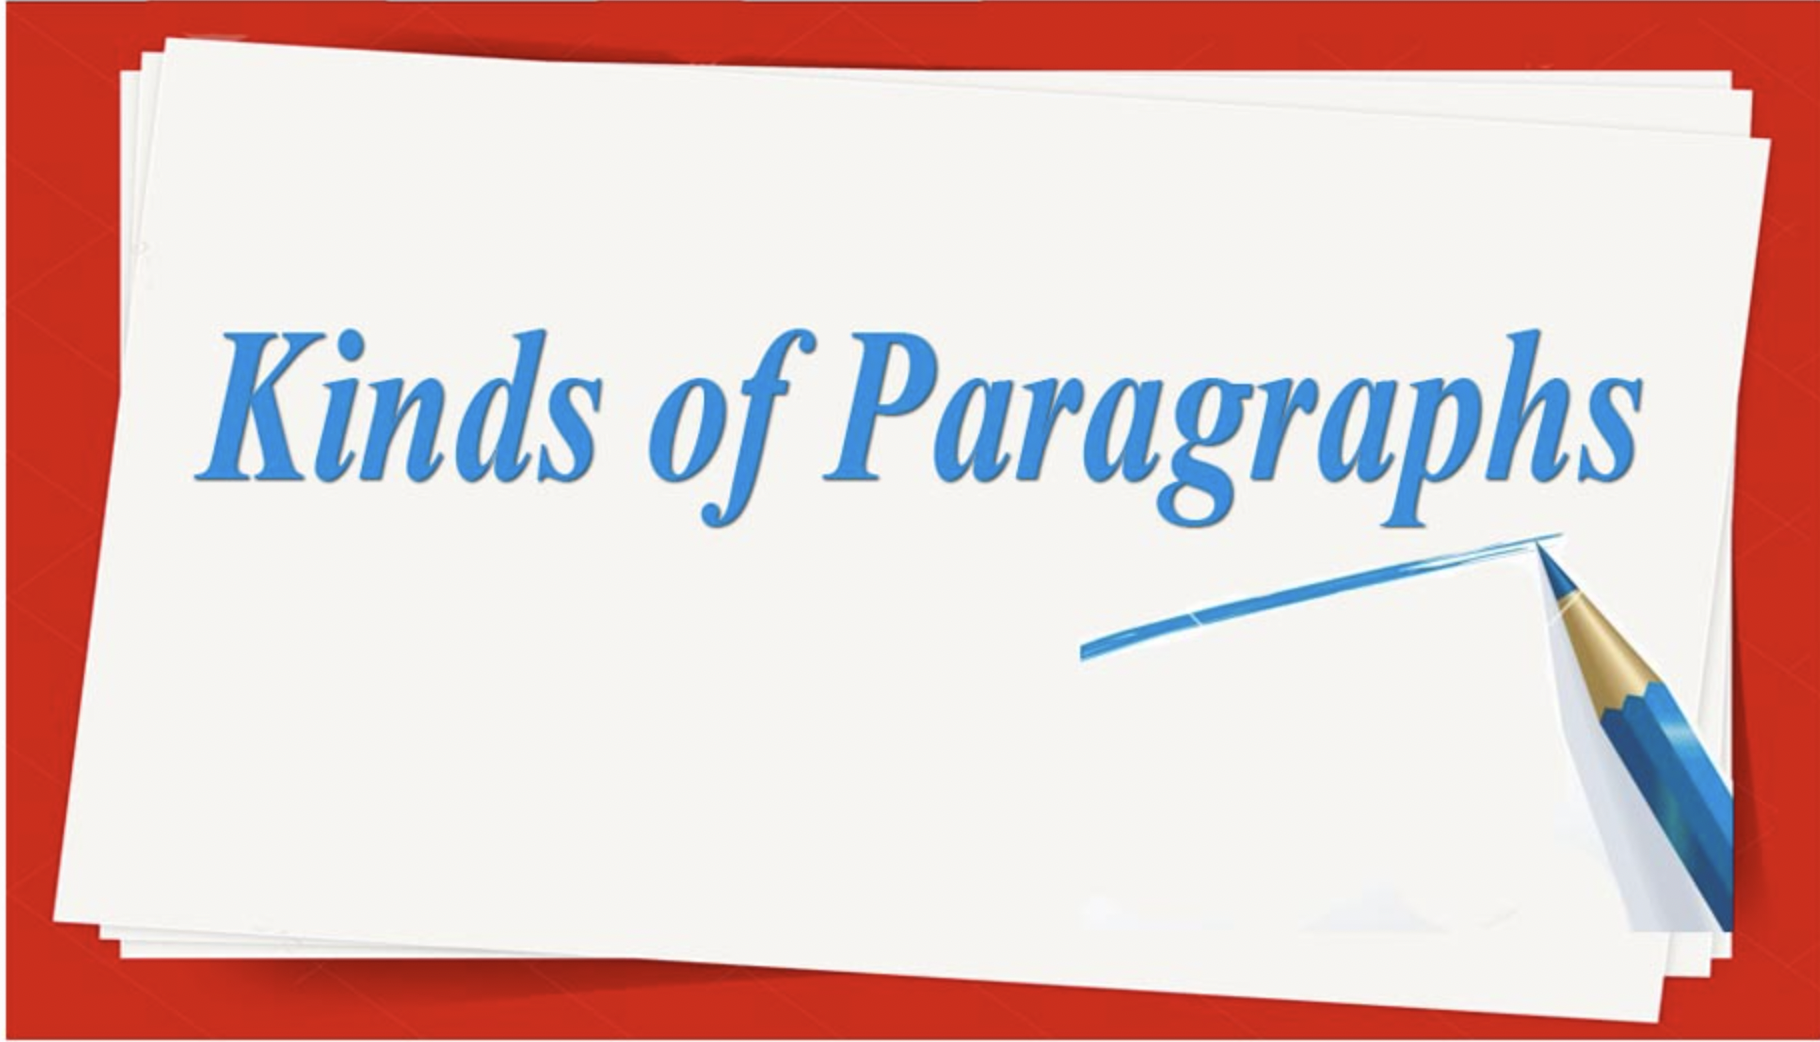 KINDS OF PARAGRAPHS